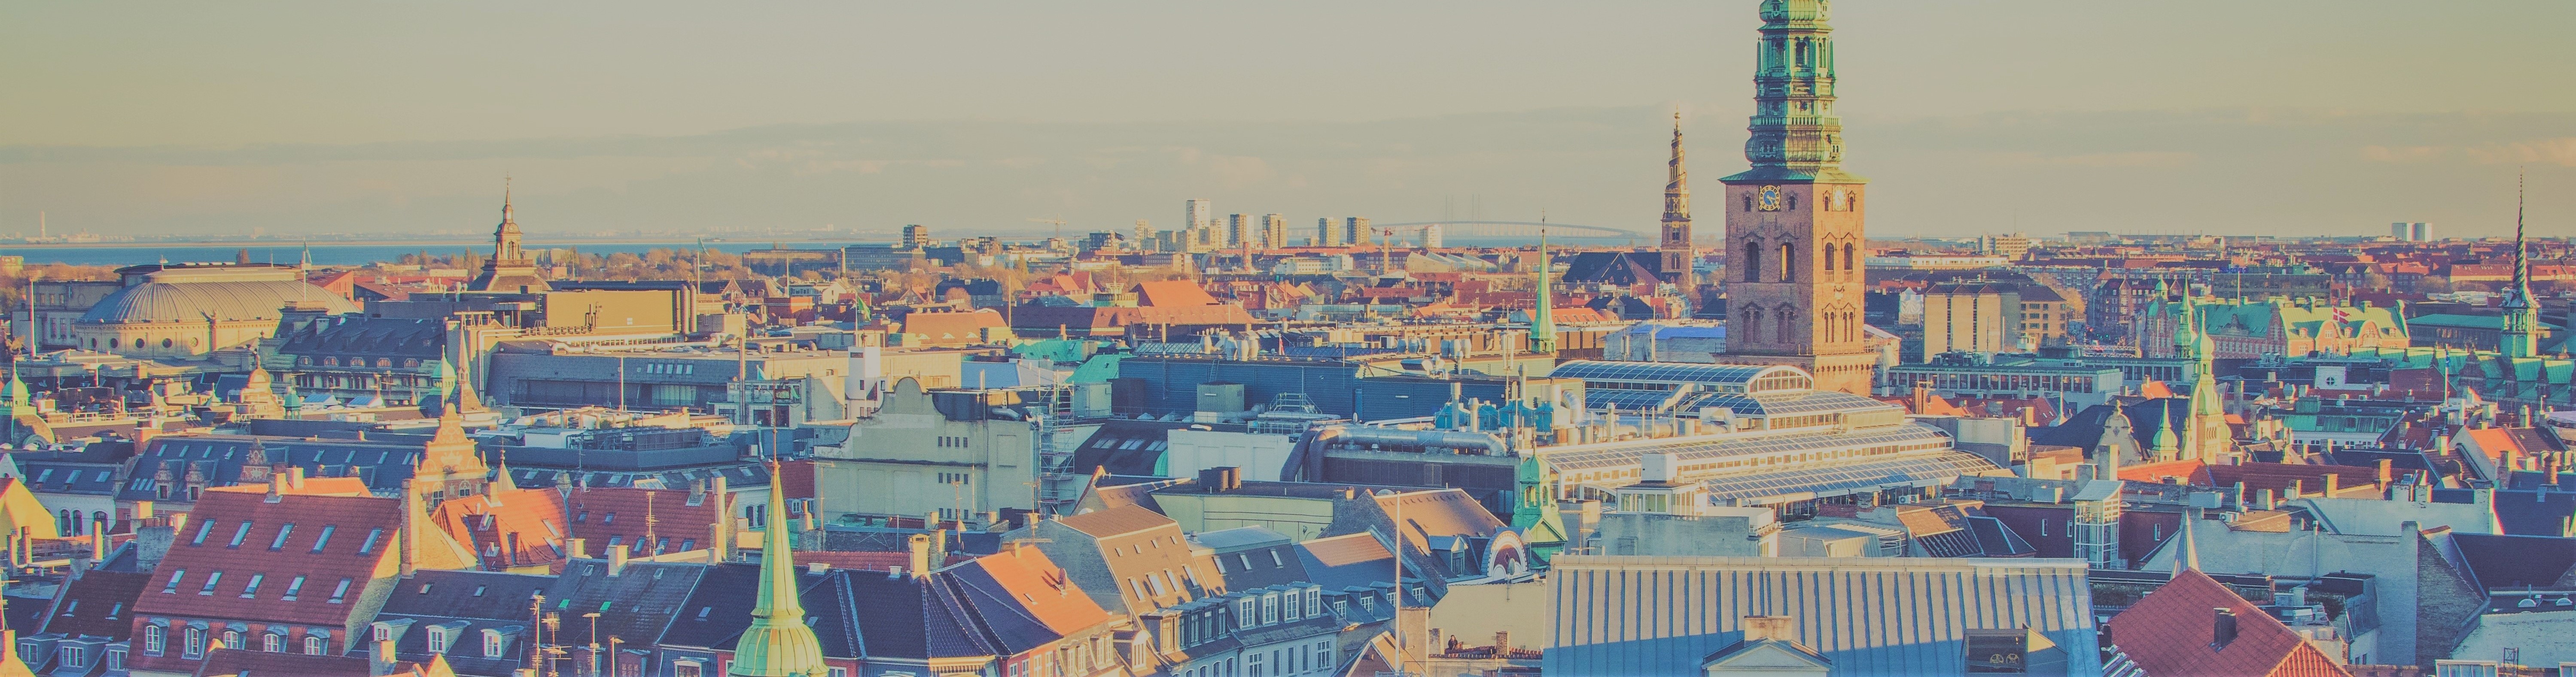 Find a rental home in Copenhagen